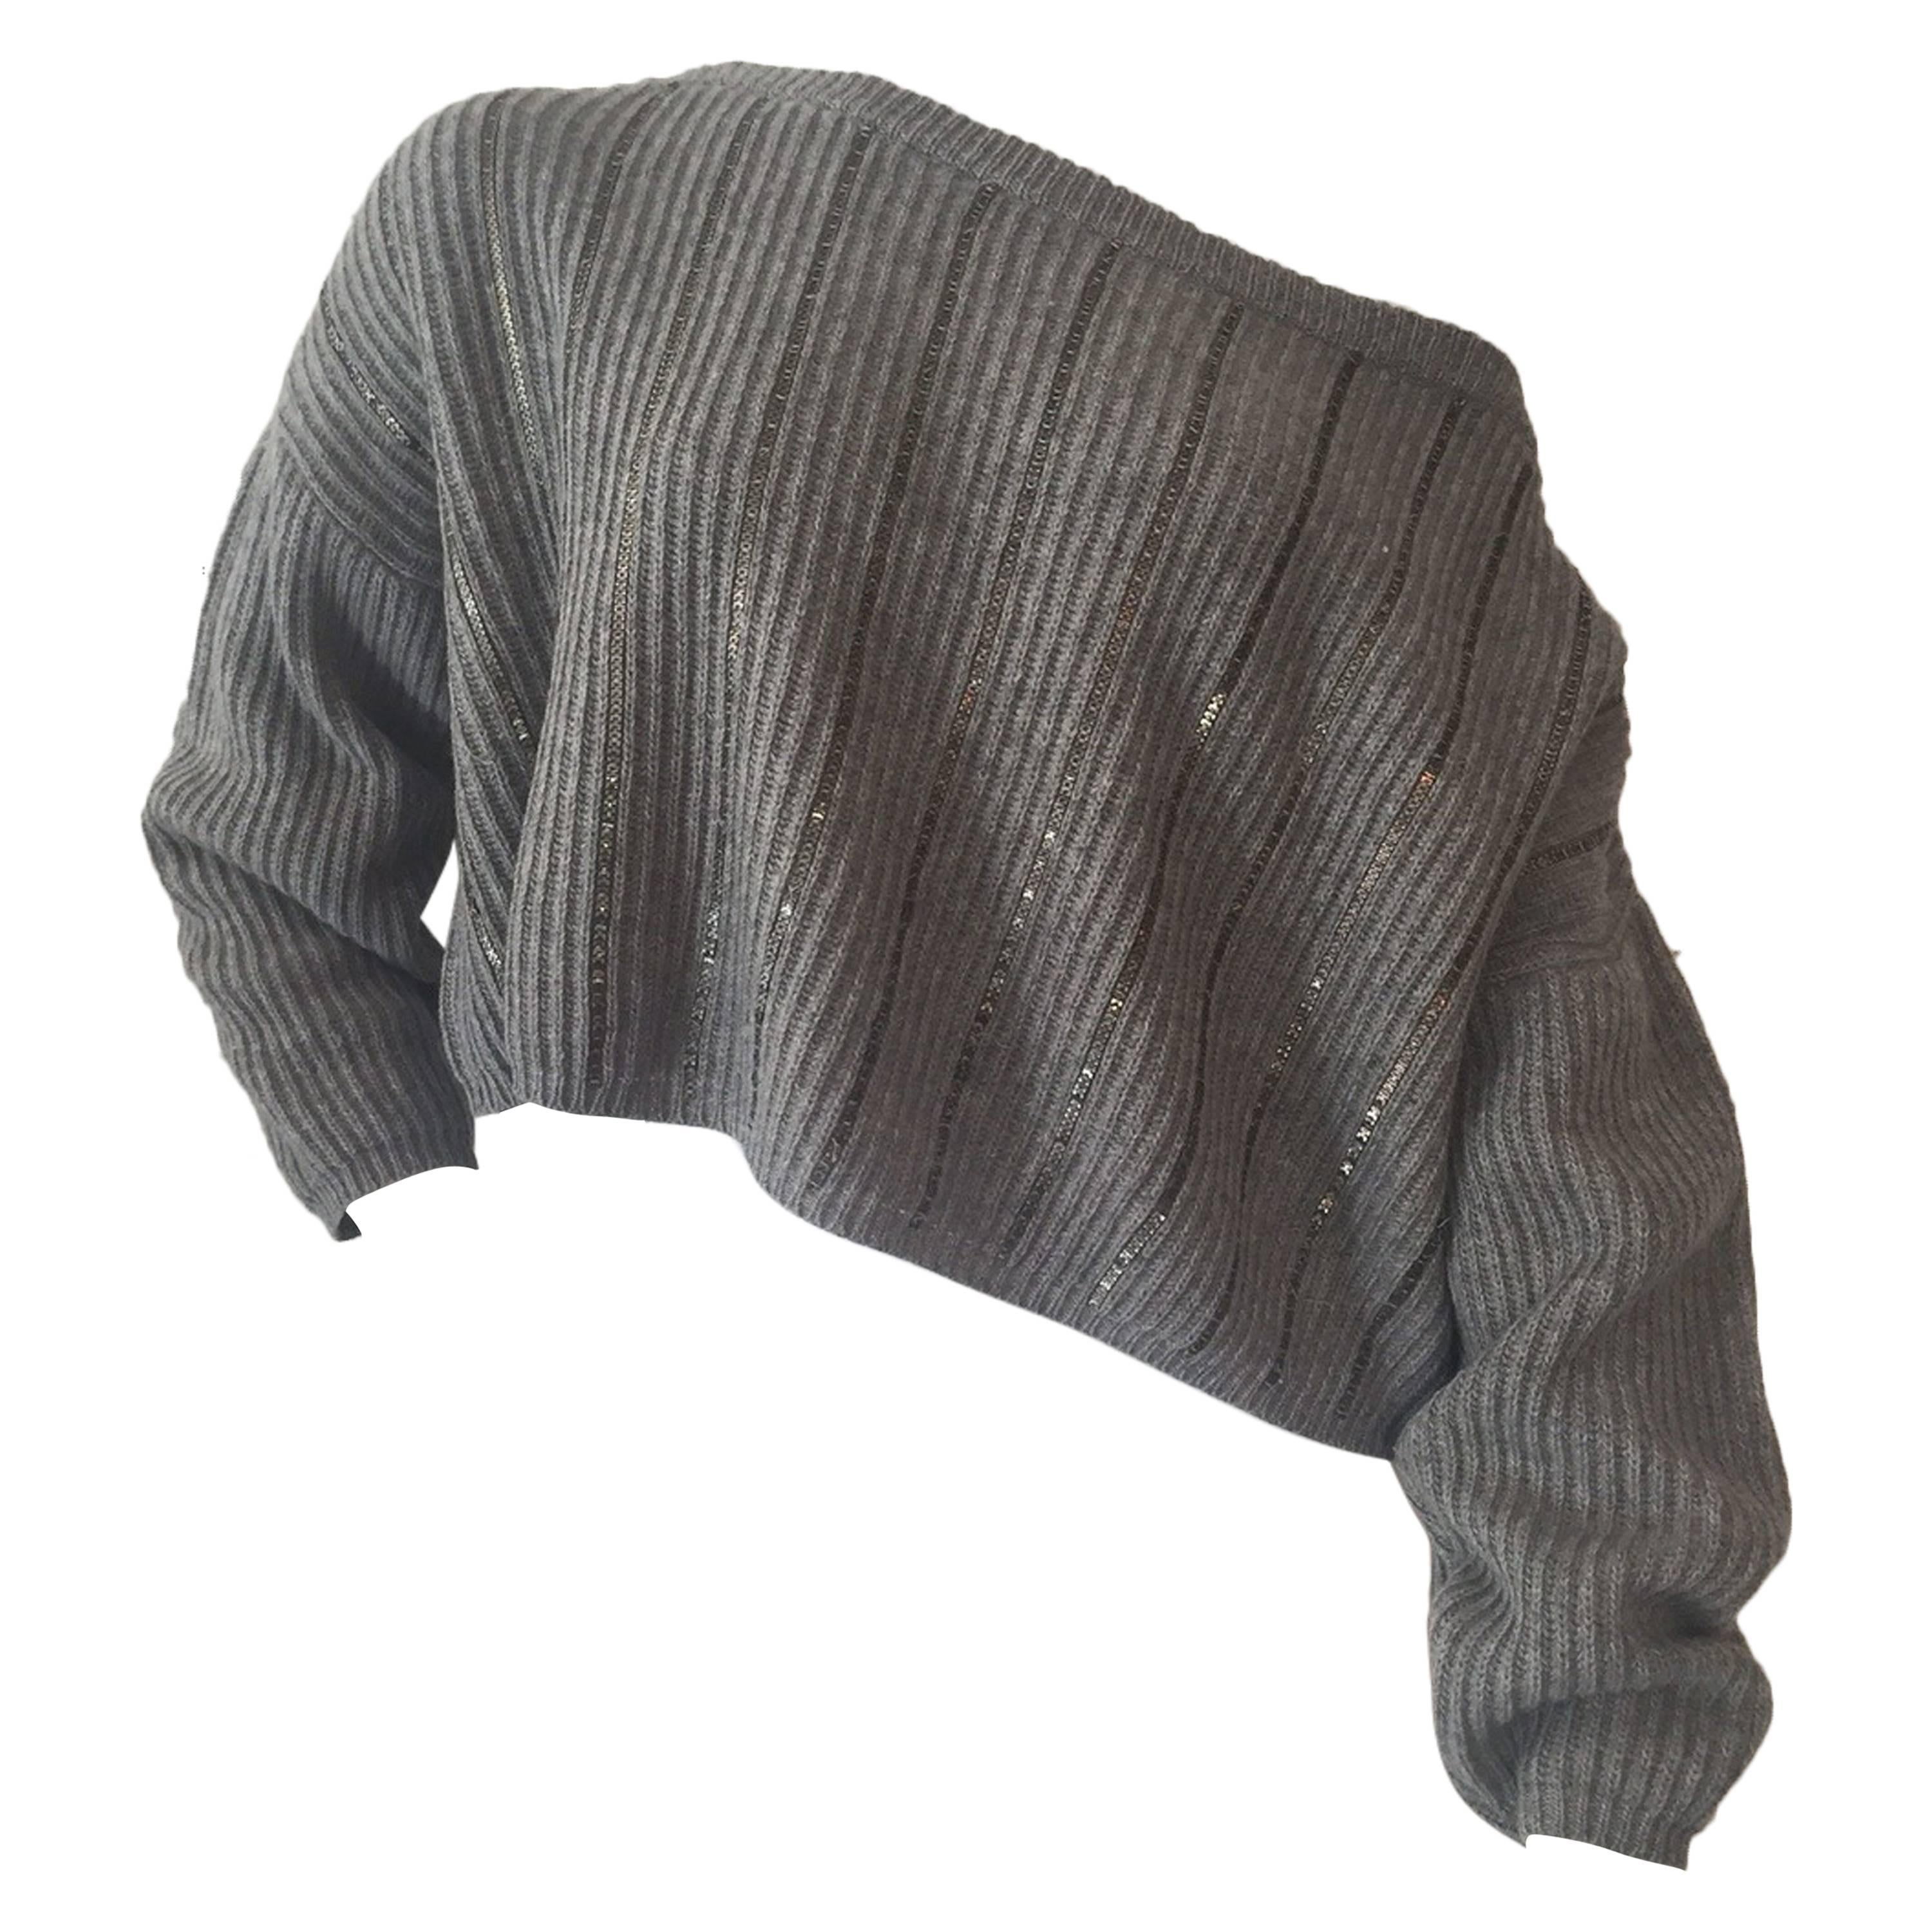 1980s Claude Montana Over-Sized Gunmetal Sweater w/ Chainlink Stripes.